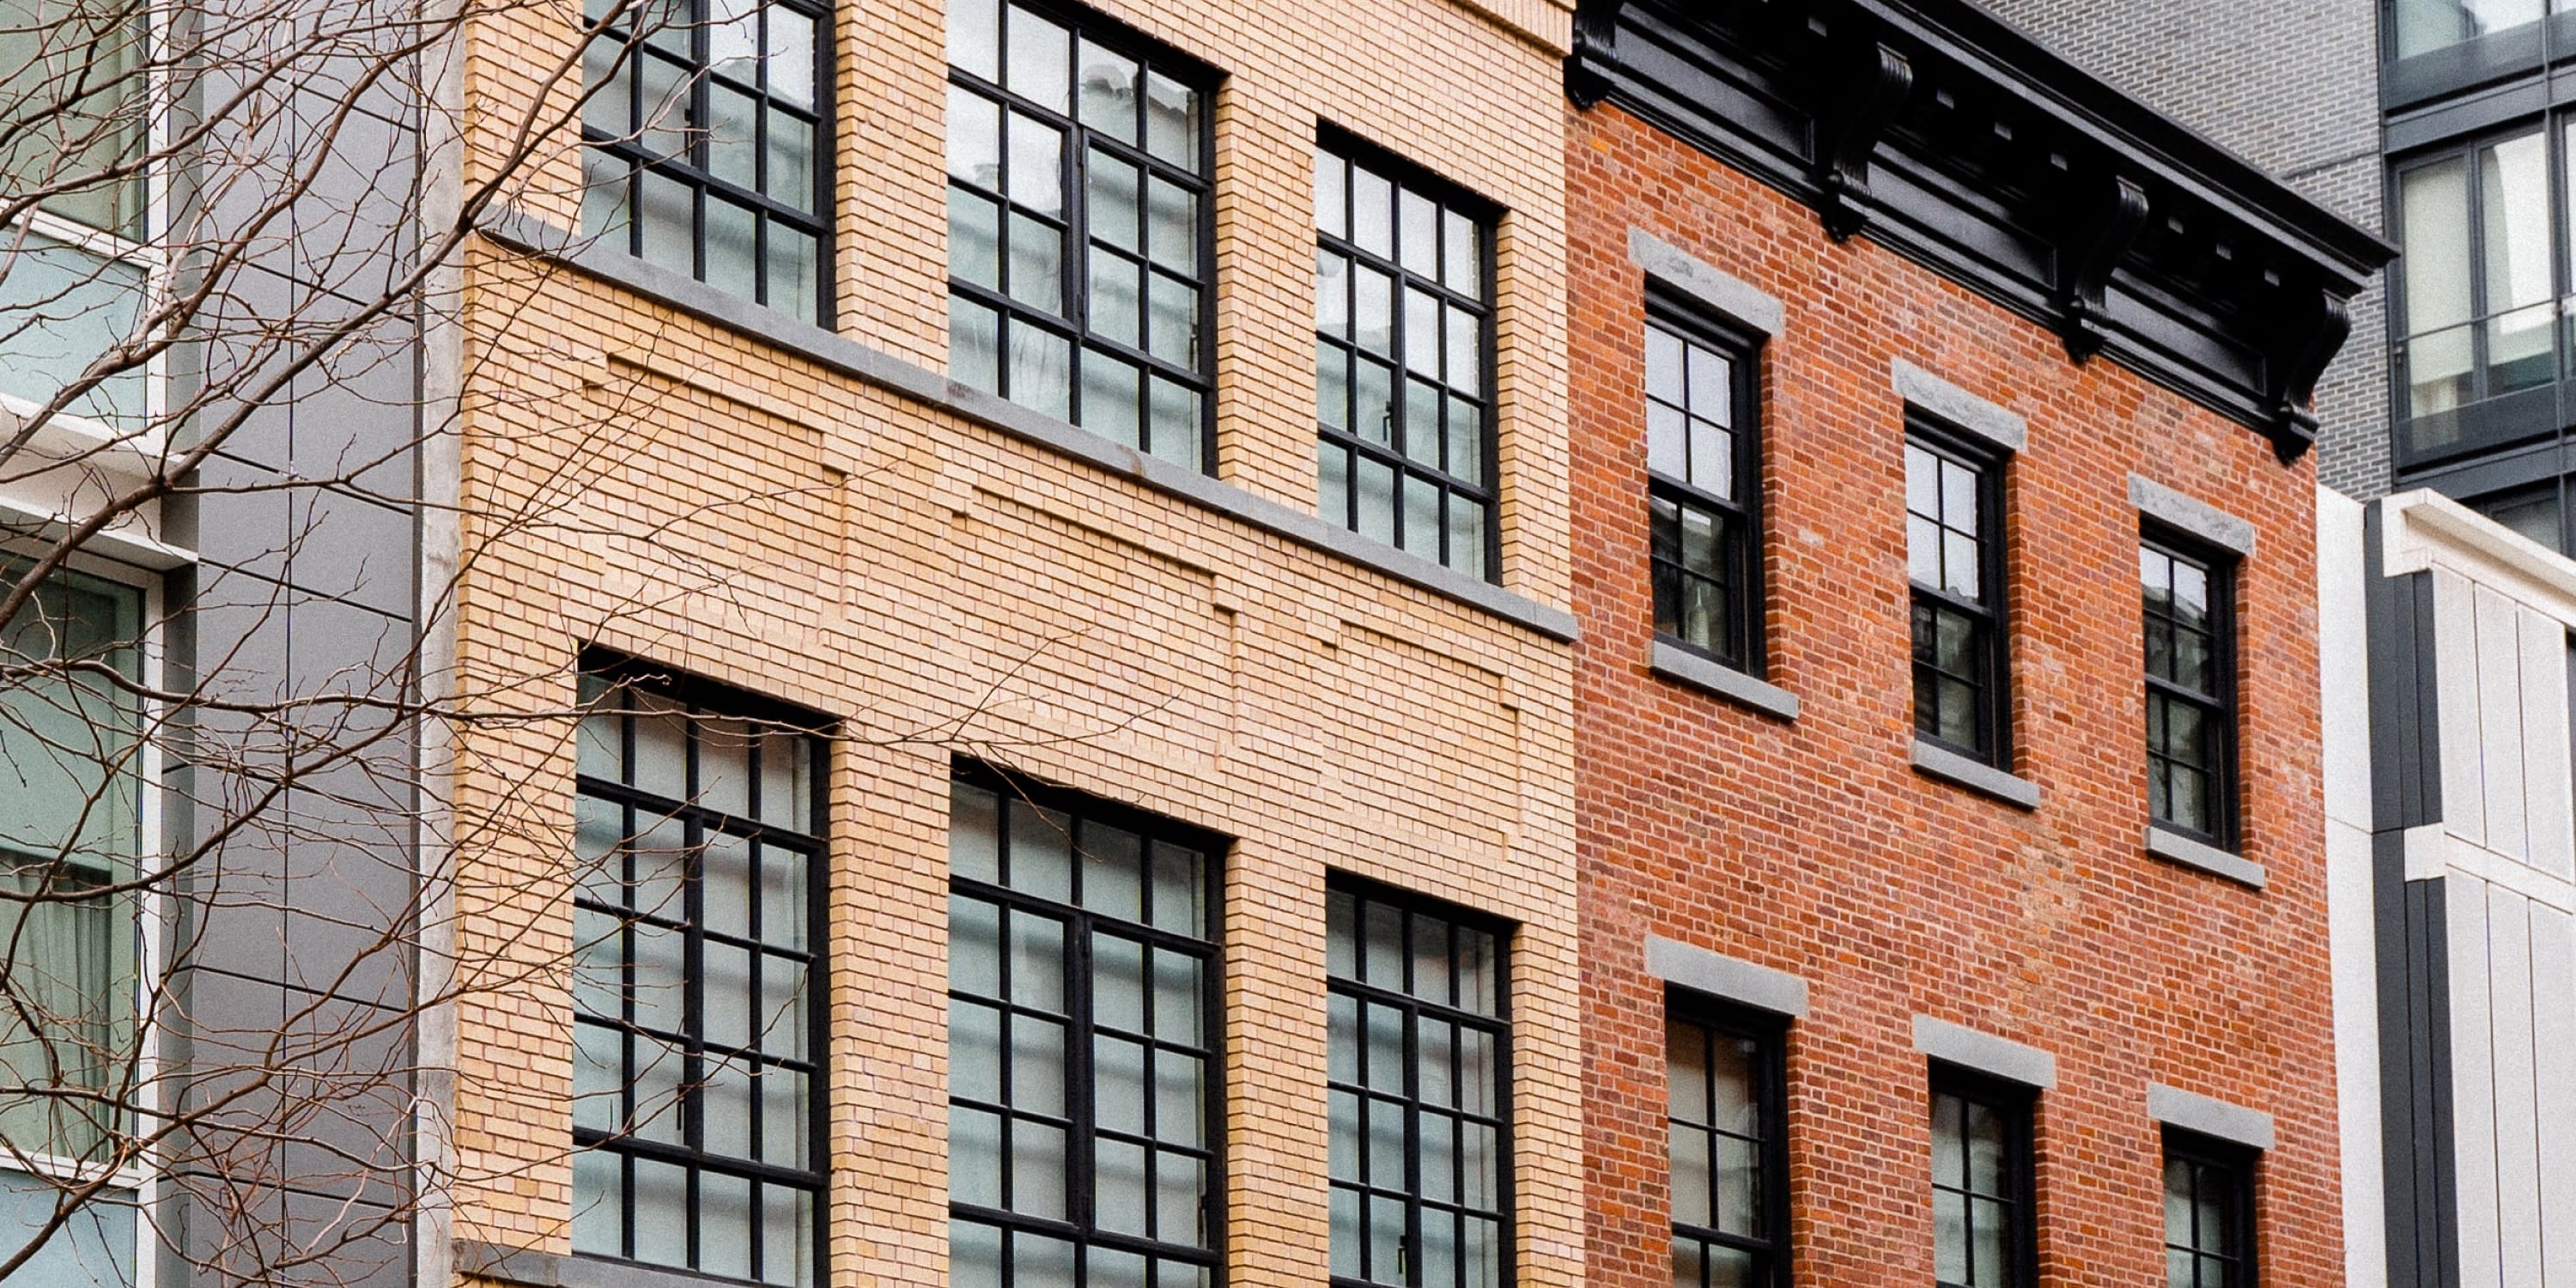 Renew renters article features historic apartment buildings 